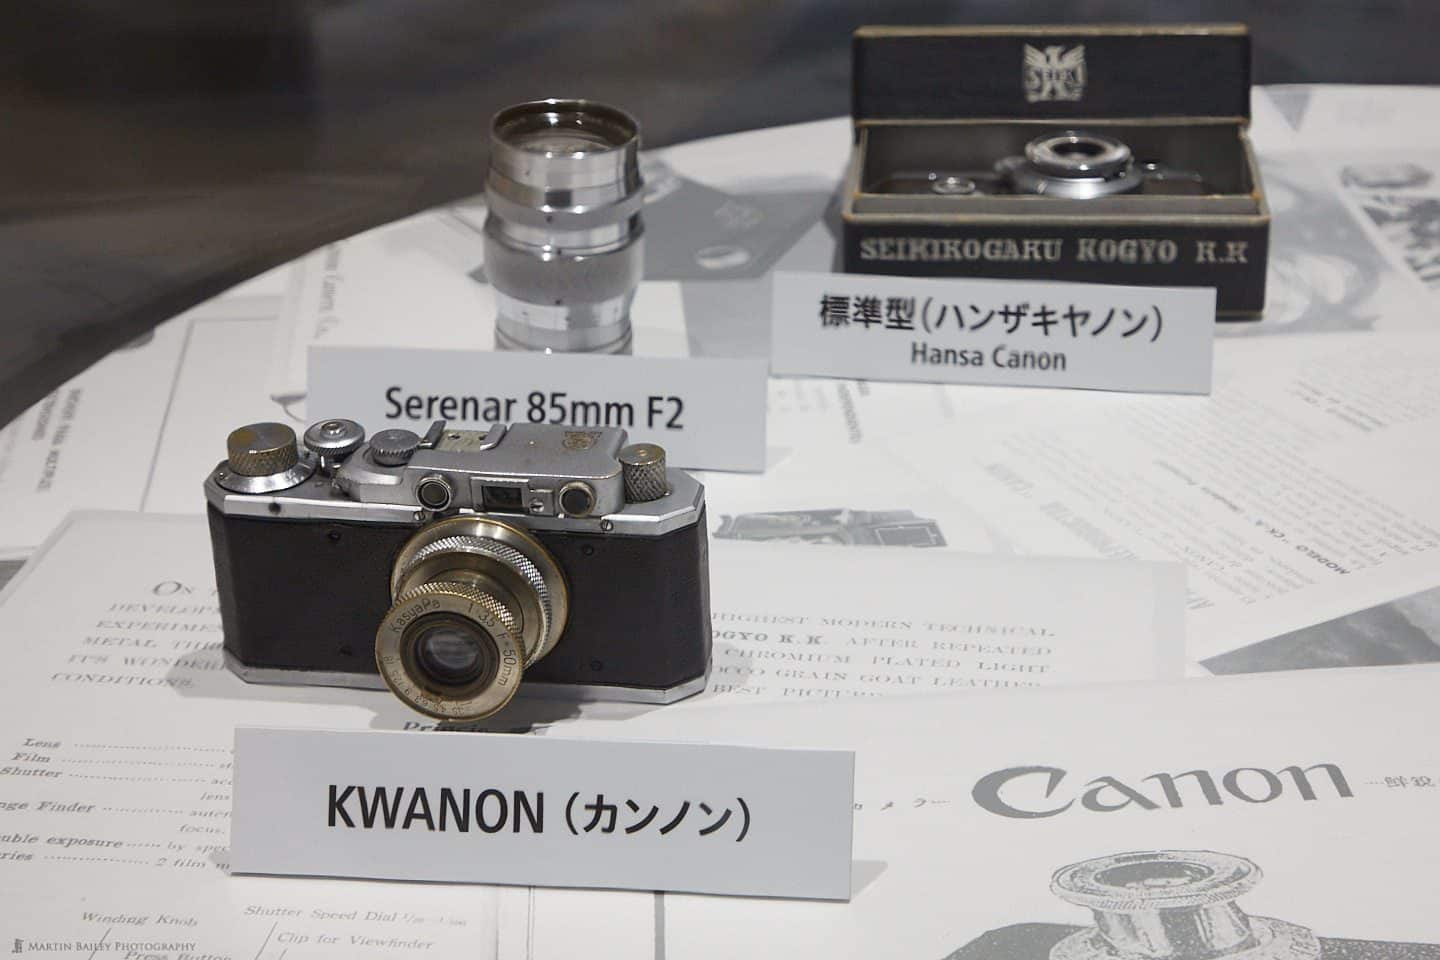 Canon's First KWANON Camera